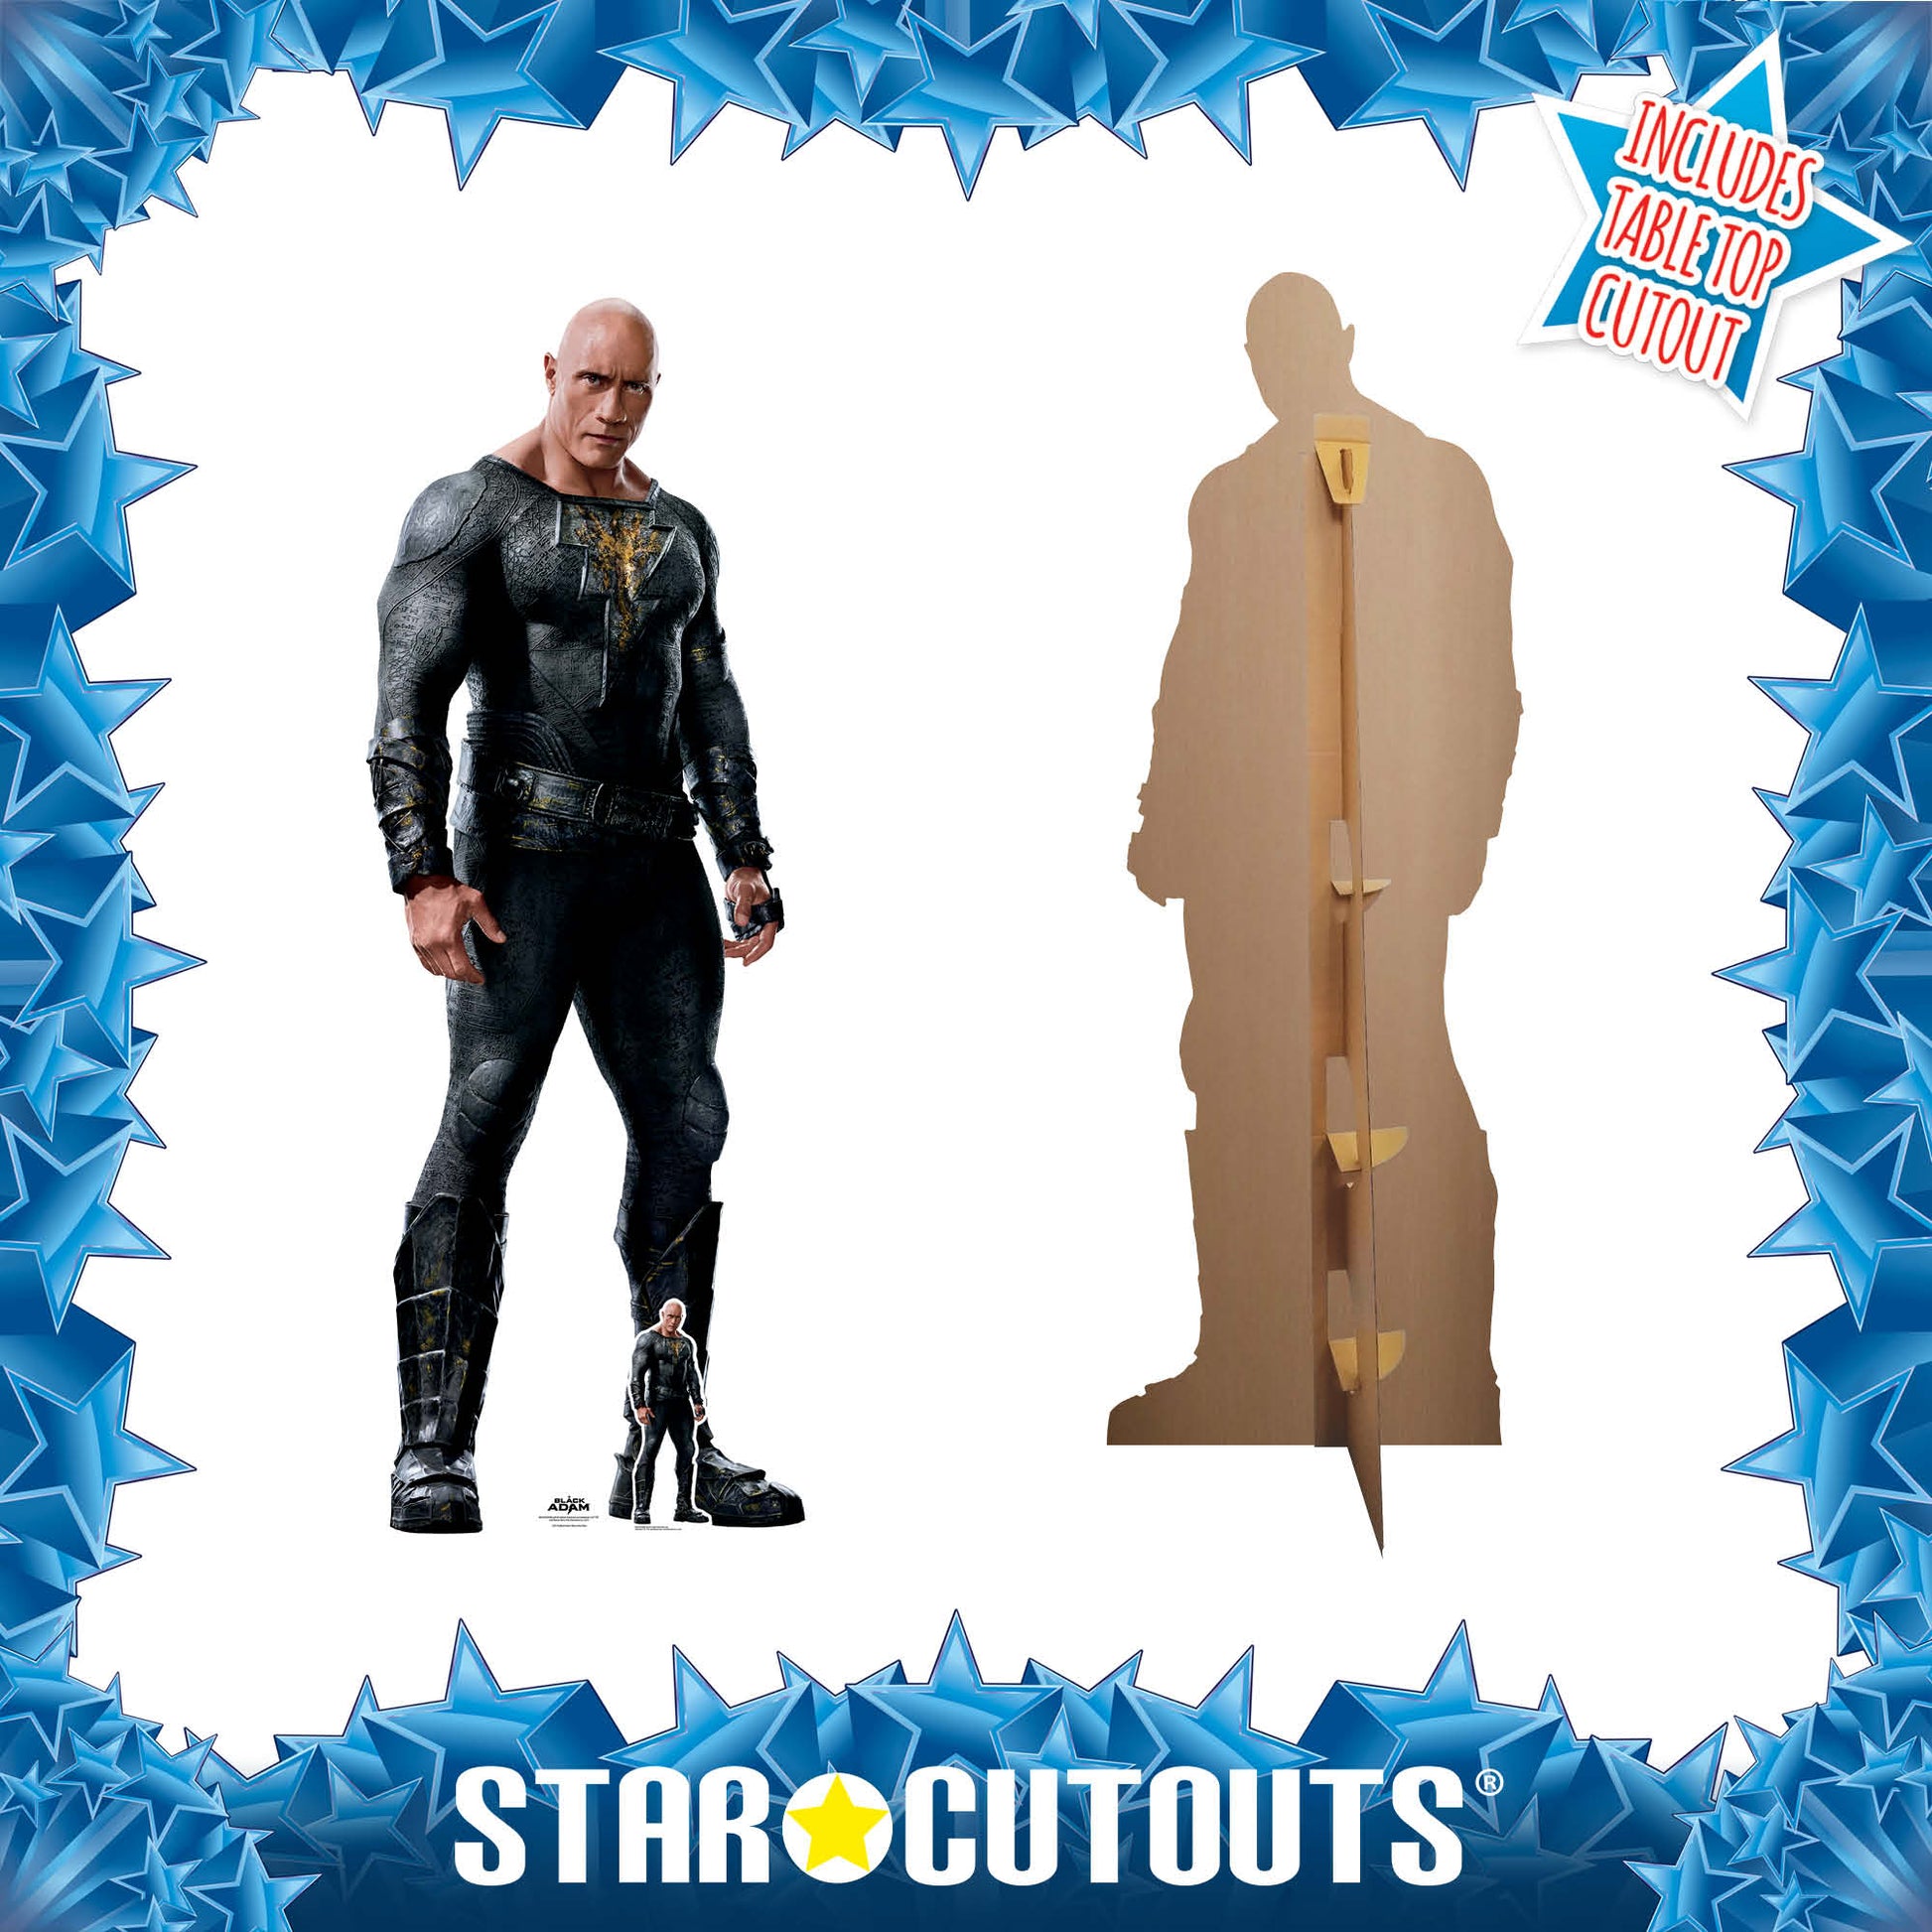 SC4170 Black Adam Dwayne Johnson Alternative Pose Cardboard Cut Out Height 192cm - Star Cutouts